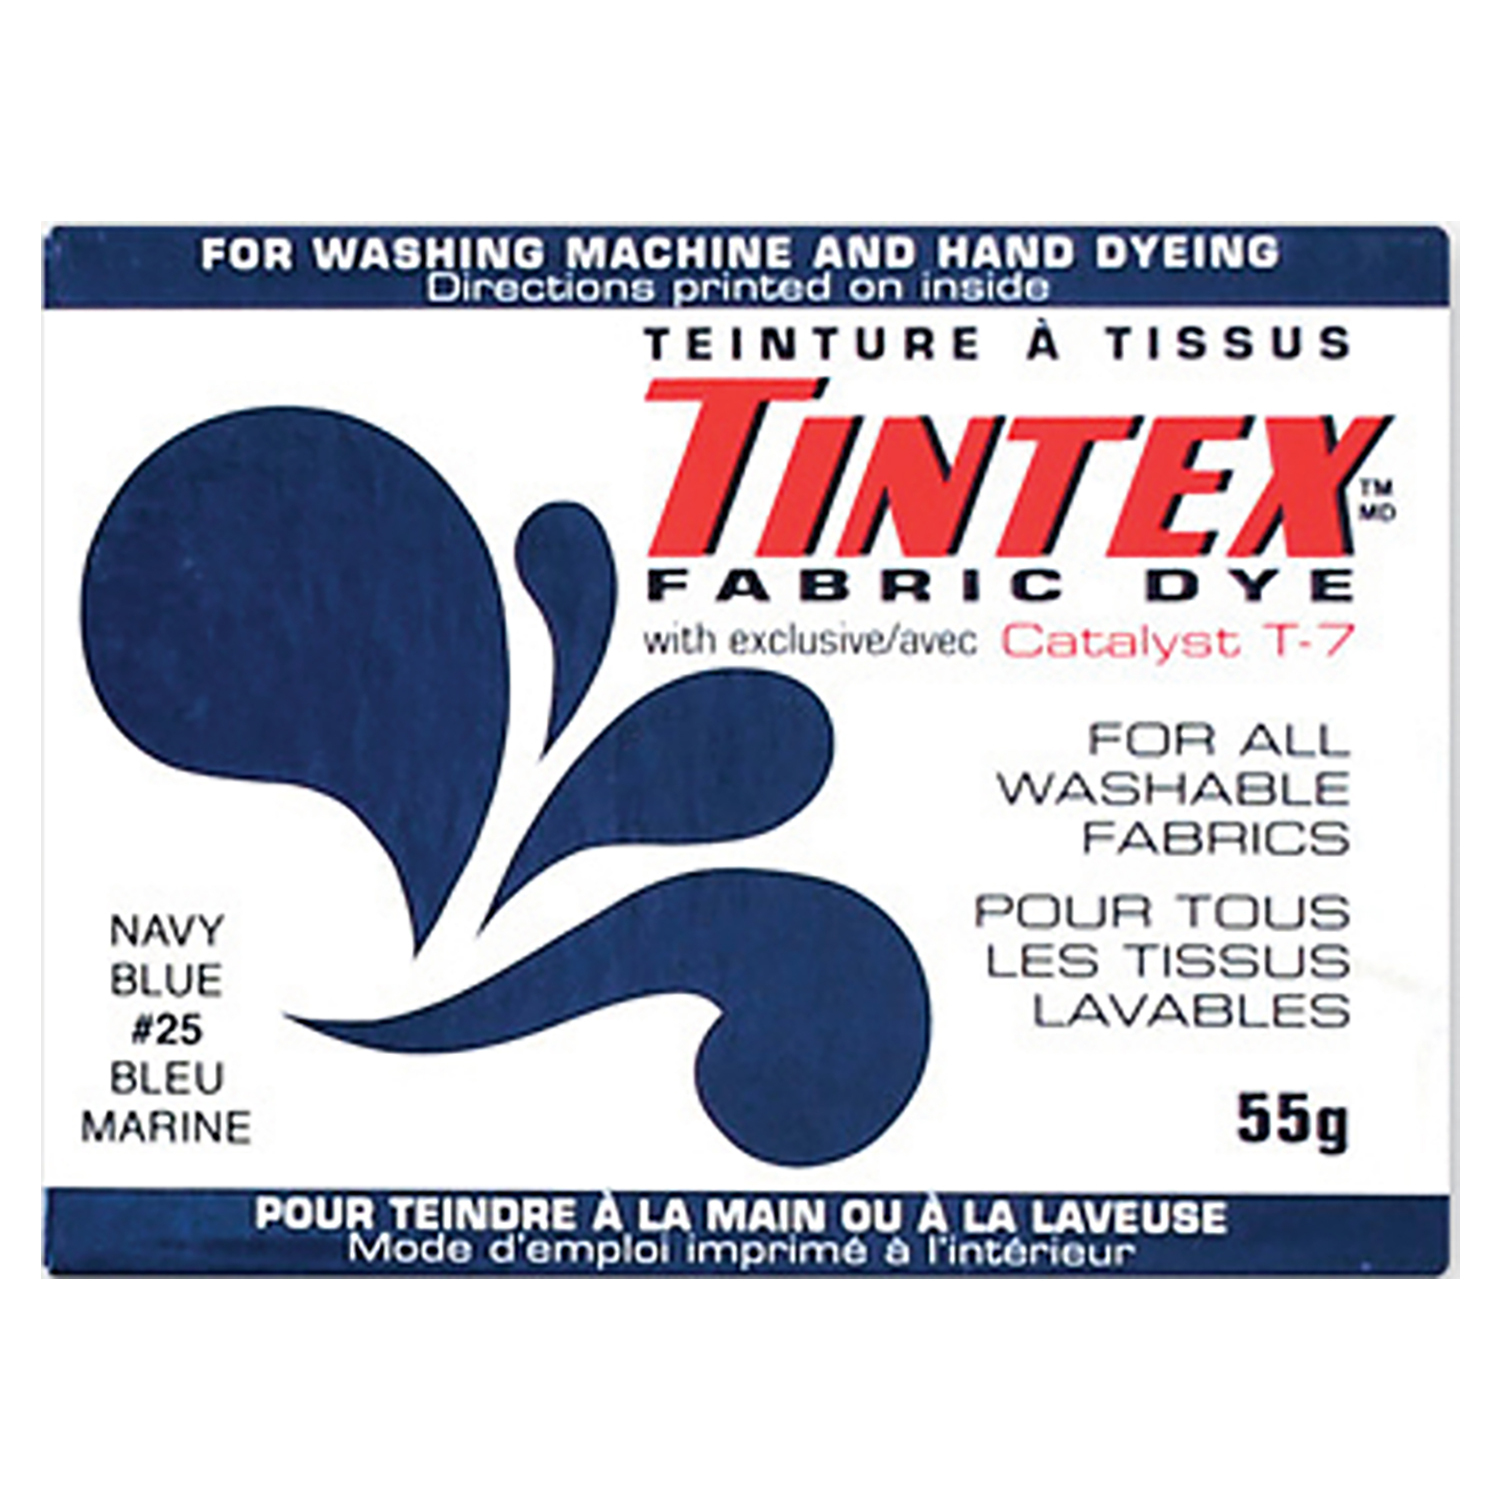 Teinture textile bleu marine maxi coloria, 2 sachets (300g + 50g